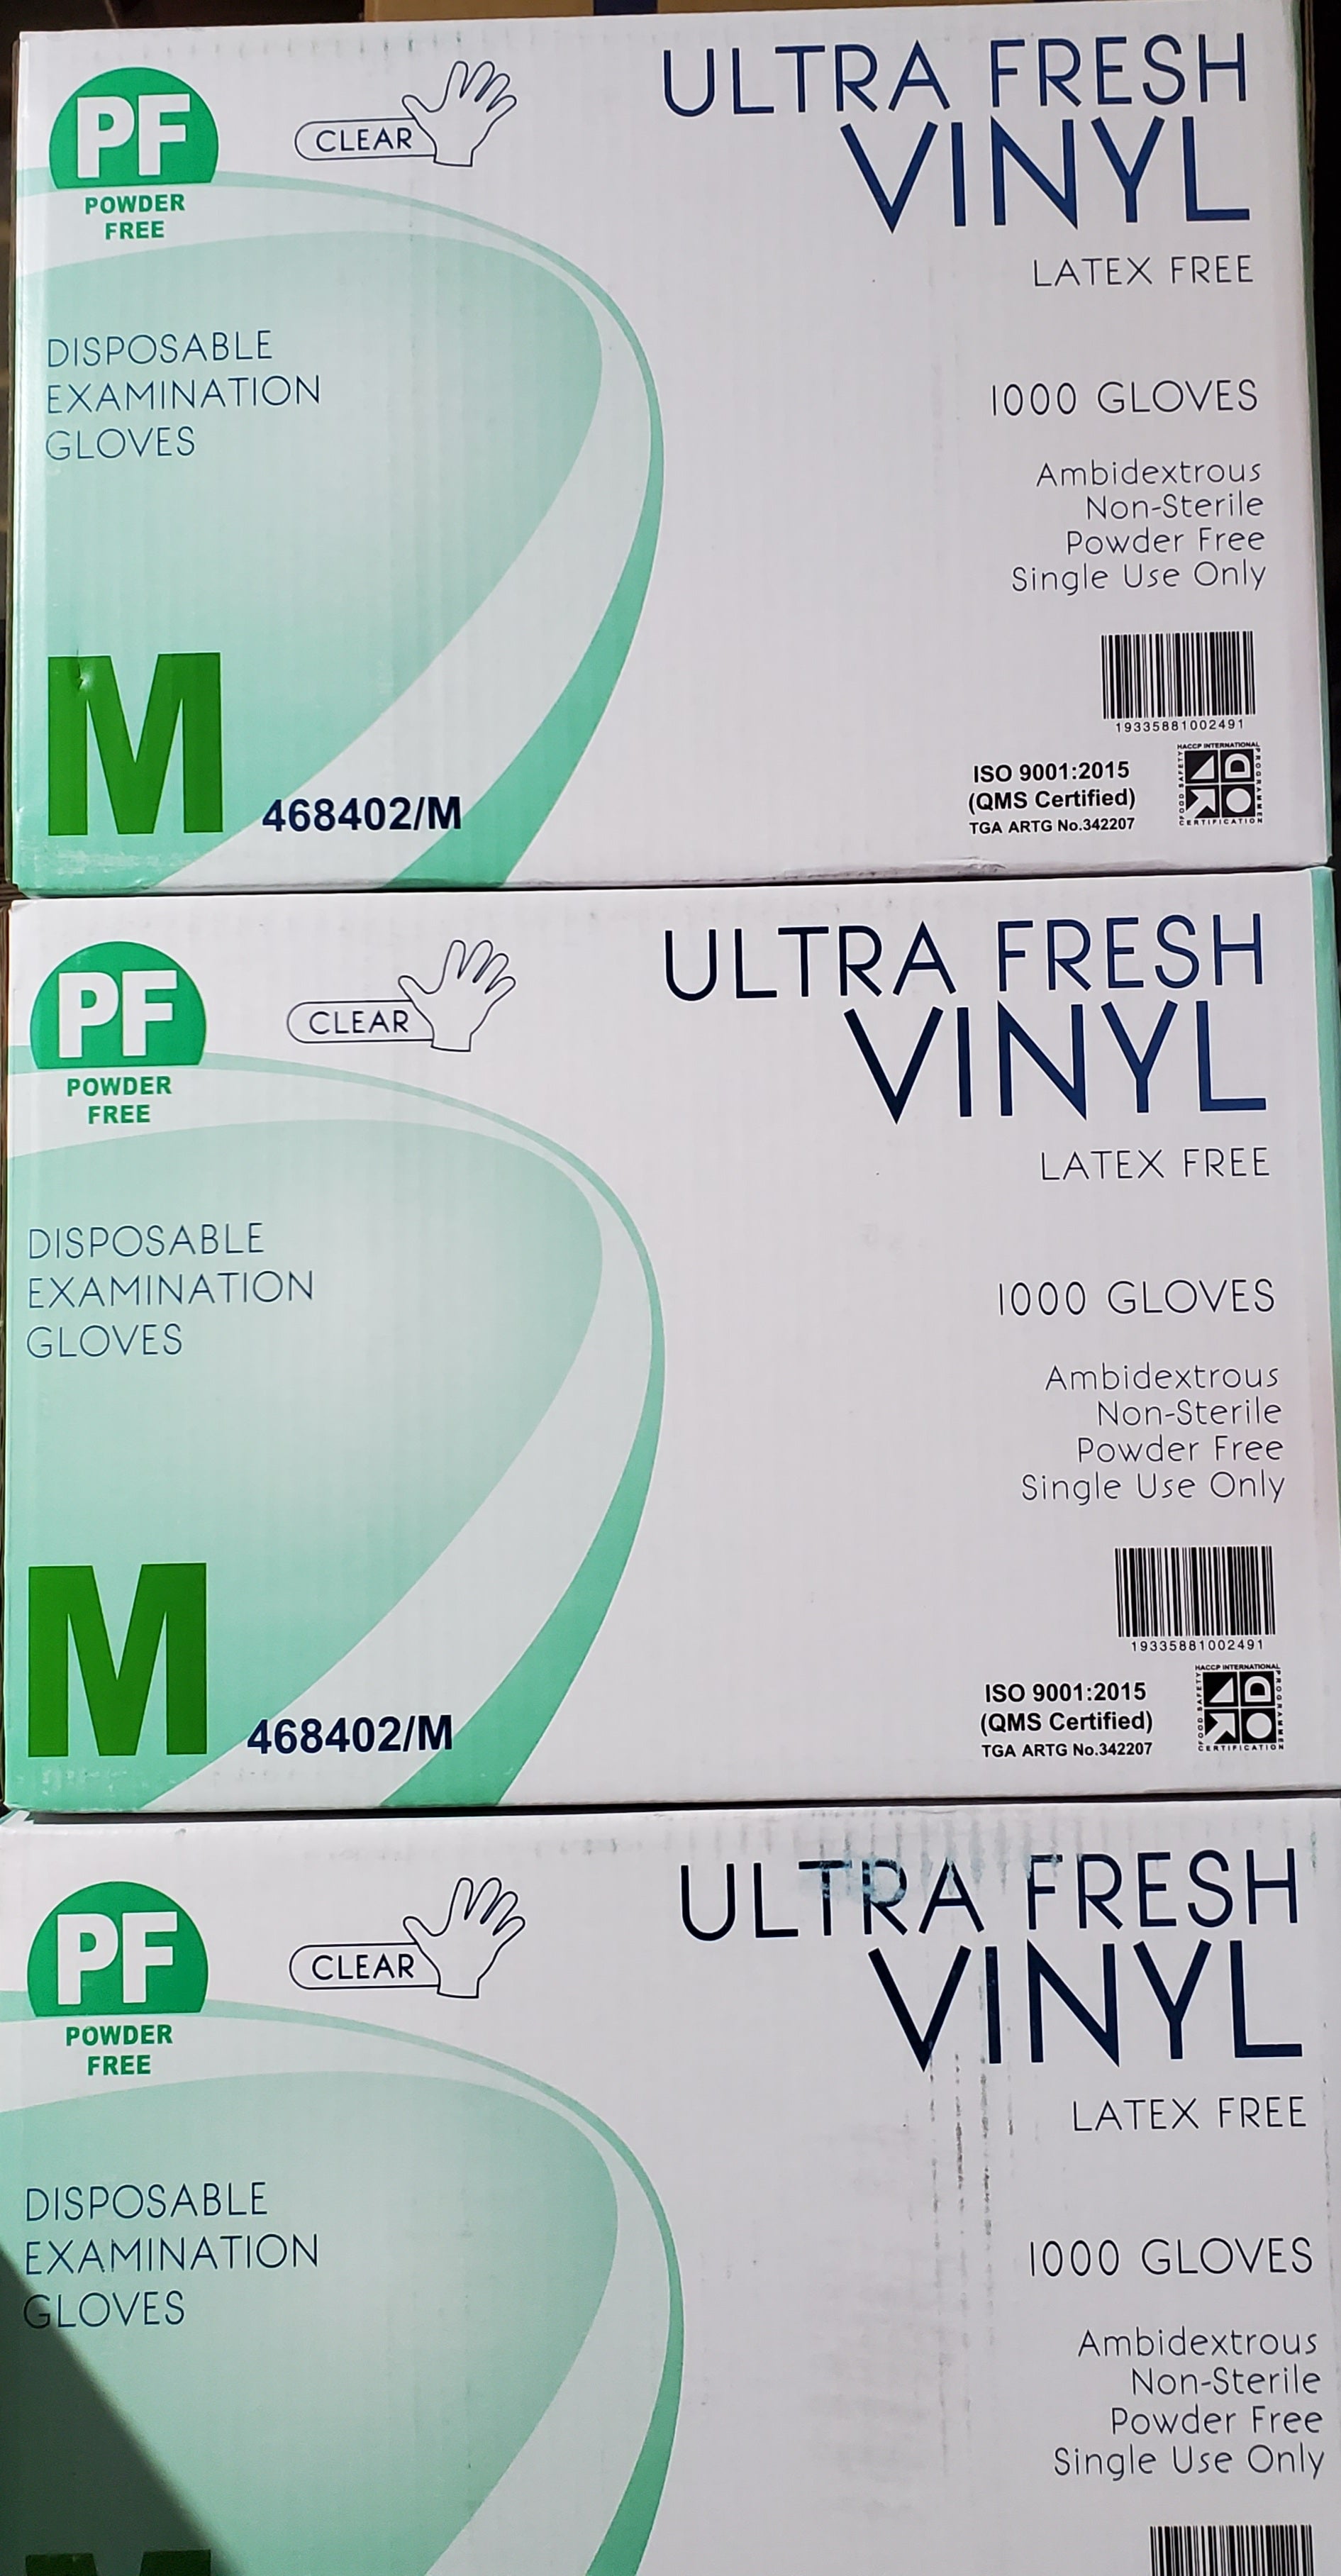 Ultra Fresh Disposable Vinyl Powder Free Gloves 100pcs